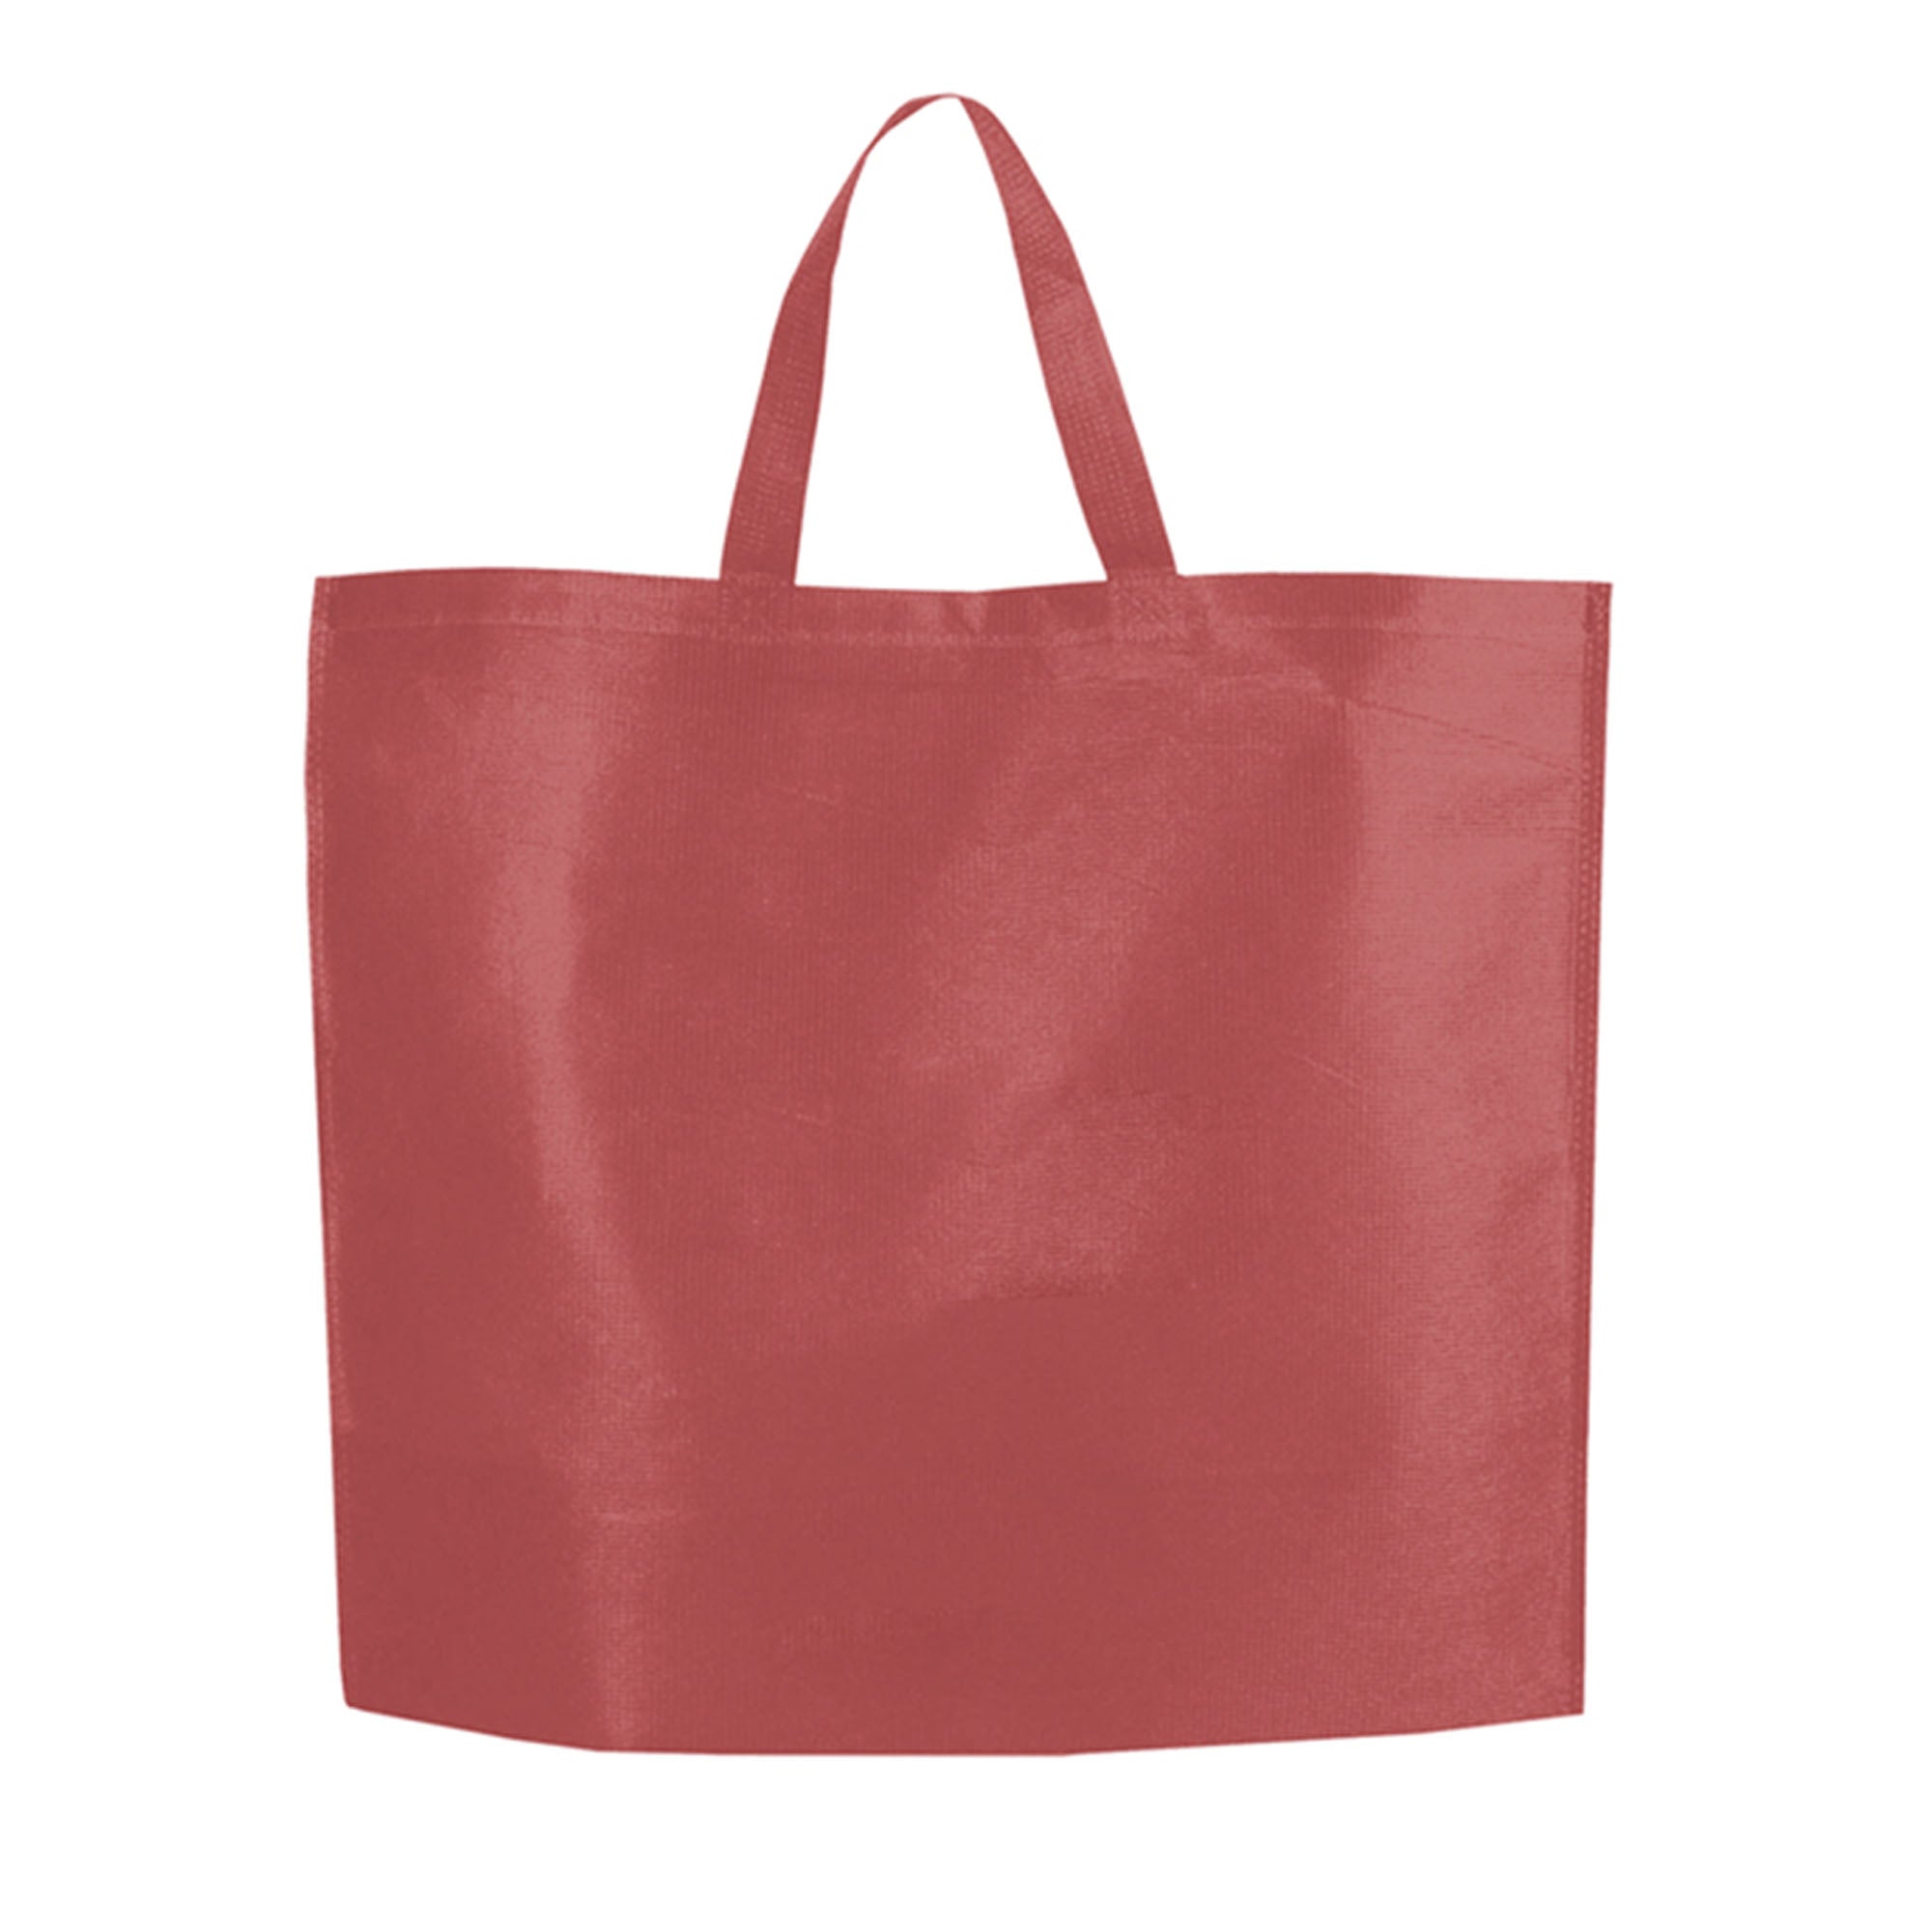 Reusable Shopper Bag - Burgundy Design